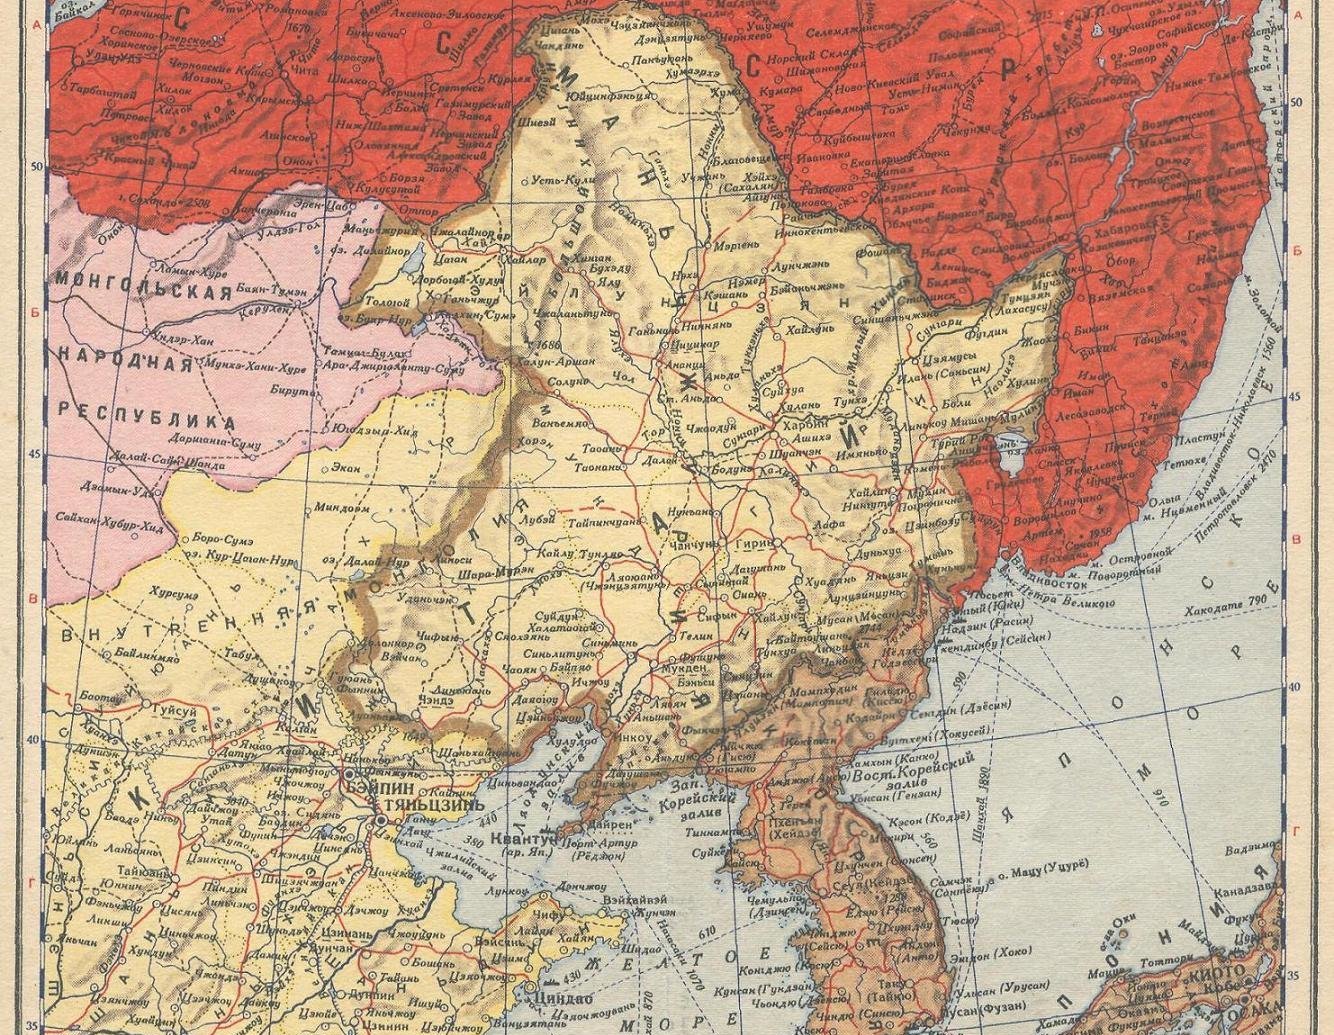 Карта маньчжоу го